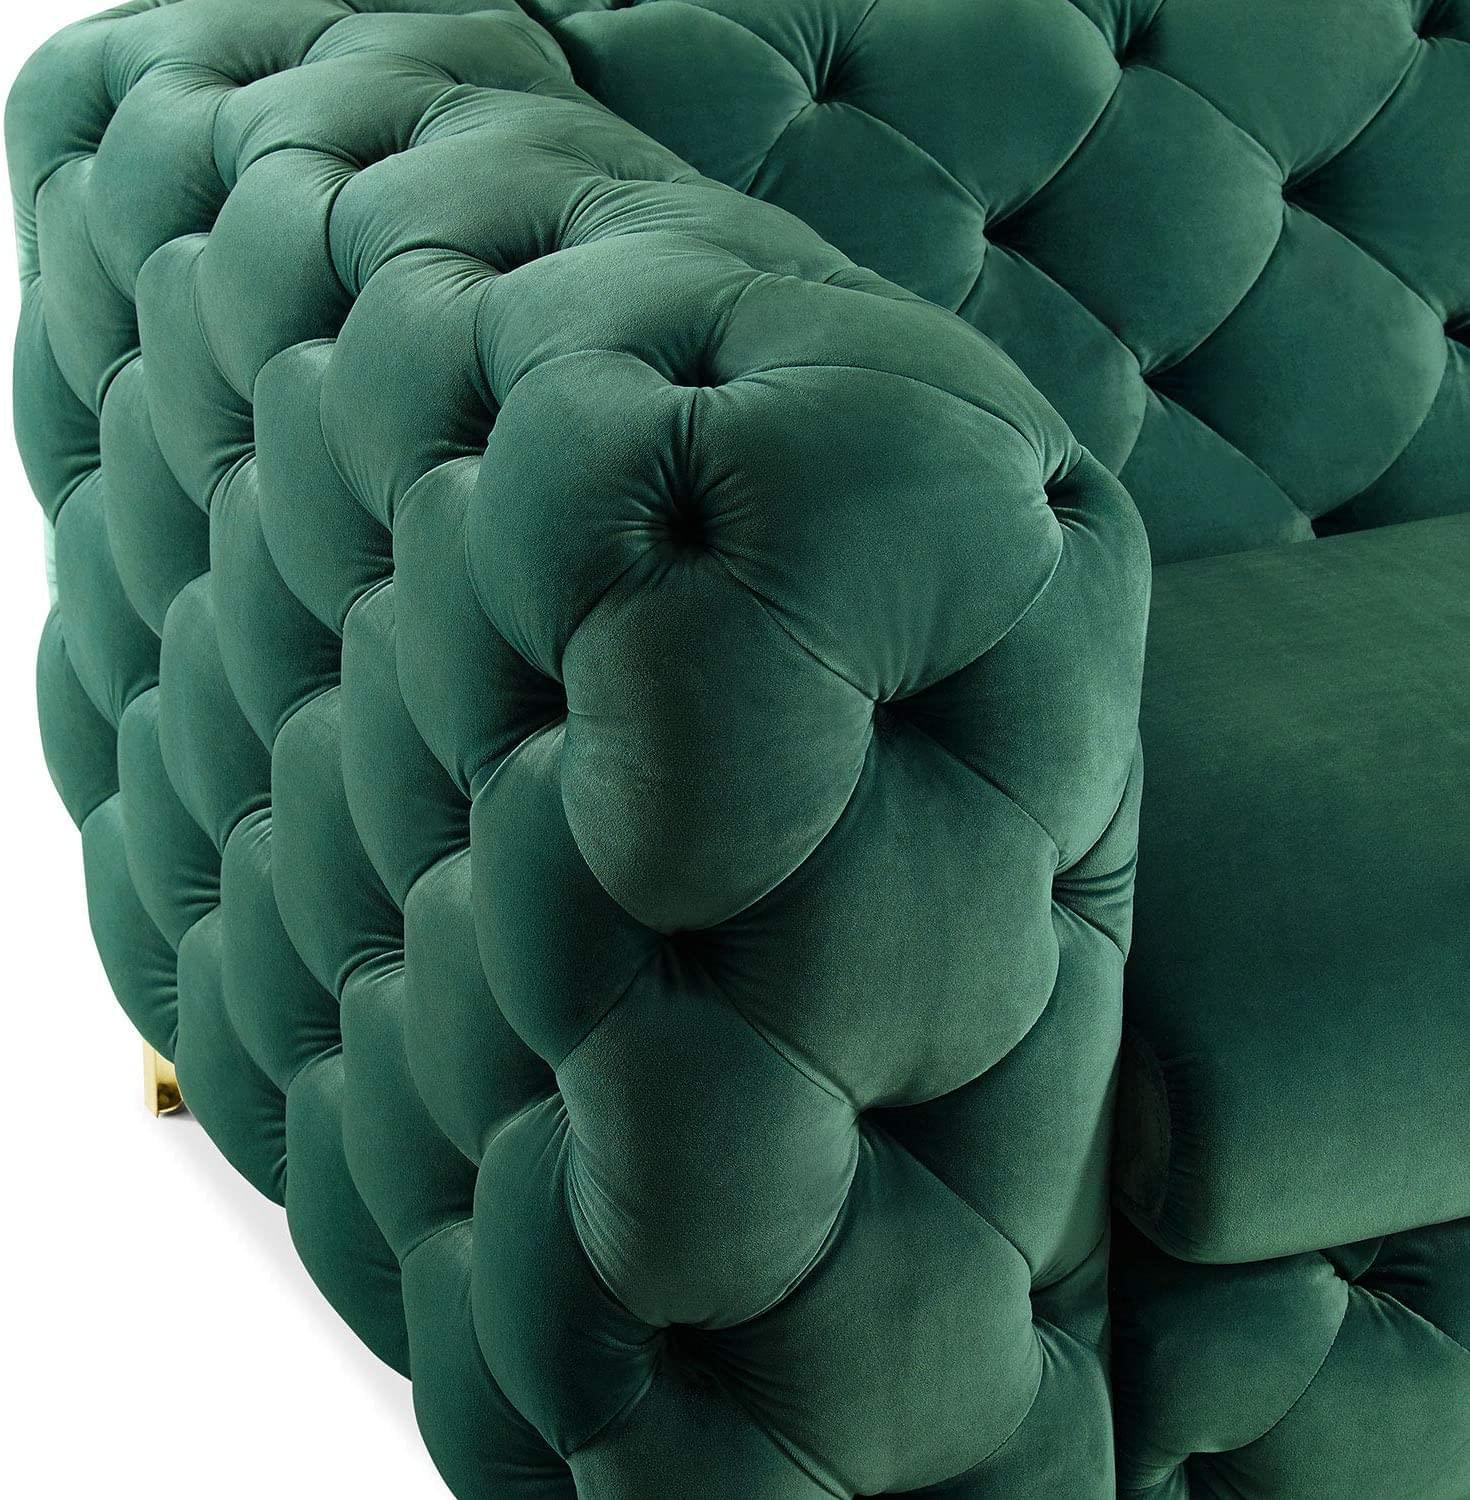 Briaton luxury Chesterfield 4pc sofa cream - Figure  It Out Furniture